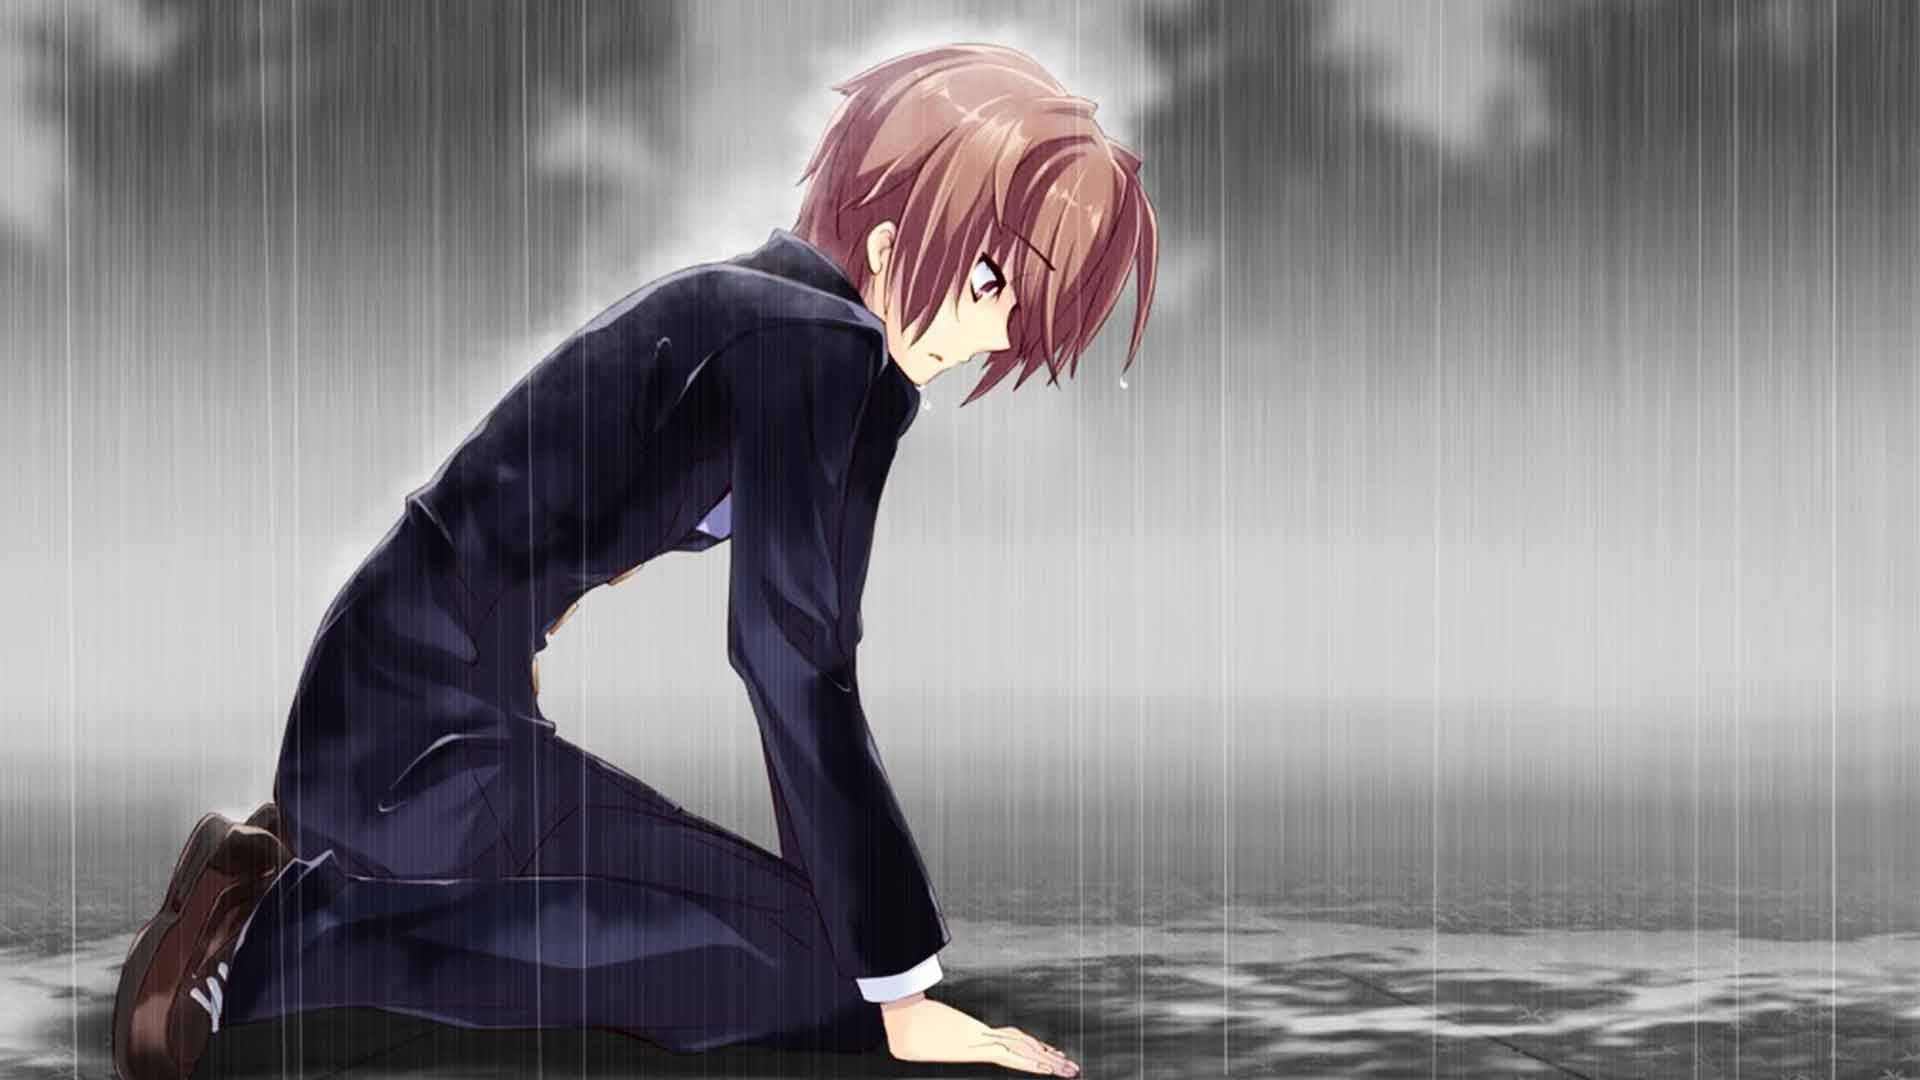 Anime Guy Kneeling In Rain Nightcore Background